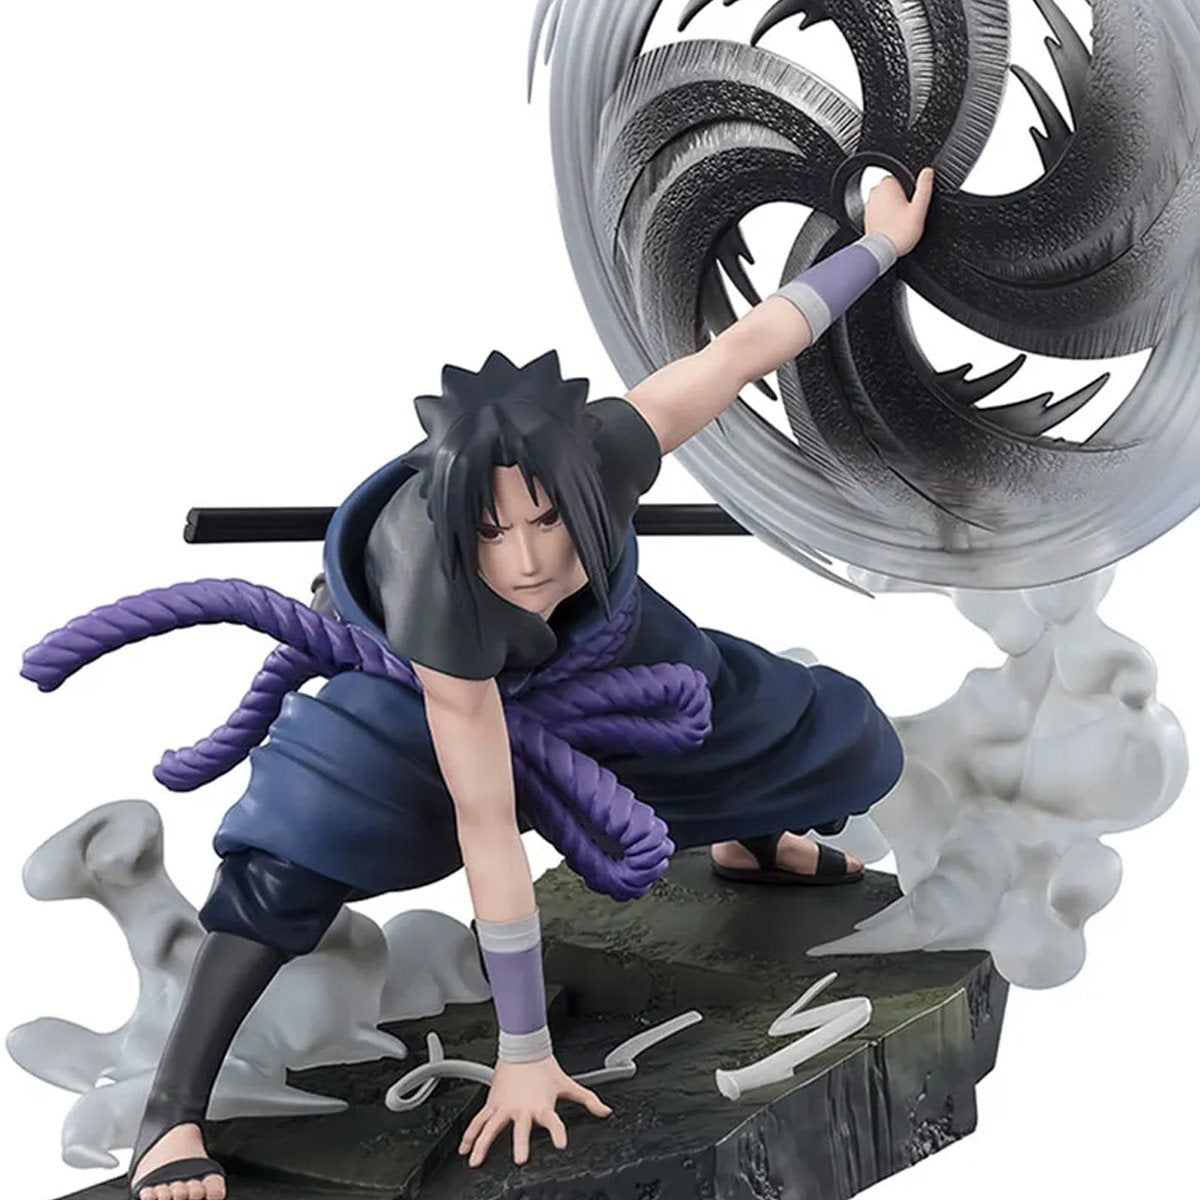 Bandai Tamashii Nations Figuarts ZERO: Naruto Shippuden - Sasuke Uchiha La luz y la oscuridad del Mangekyo Sharingan Extra Battle Estatua